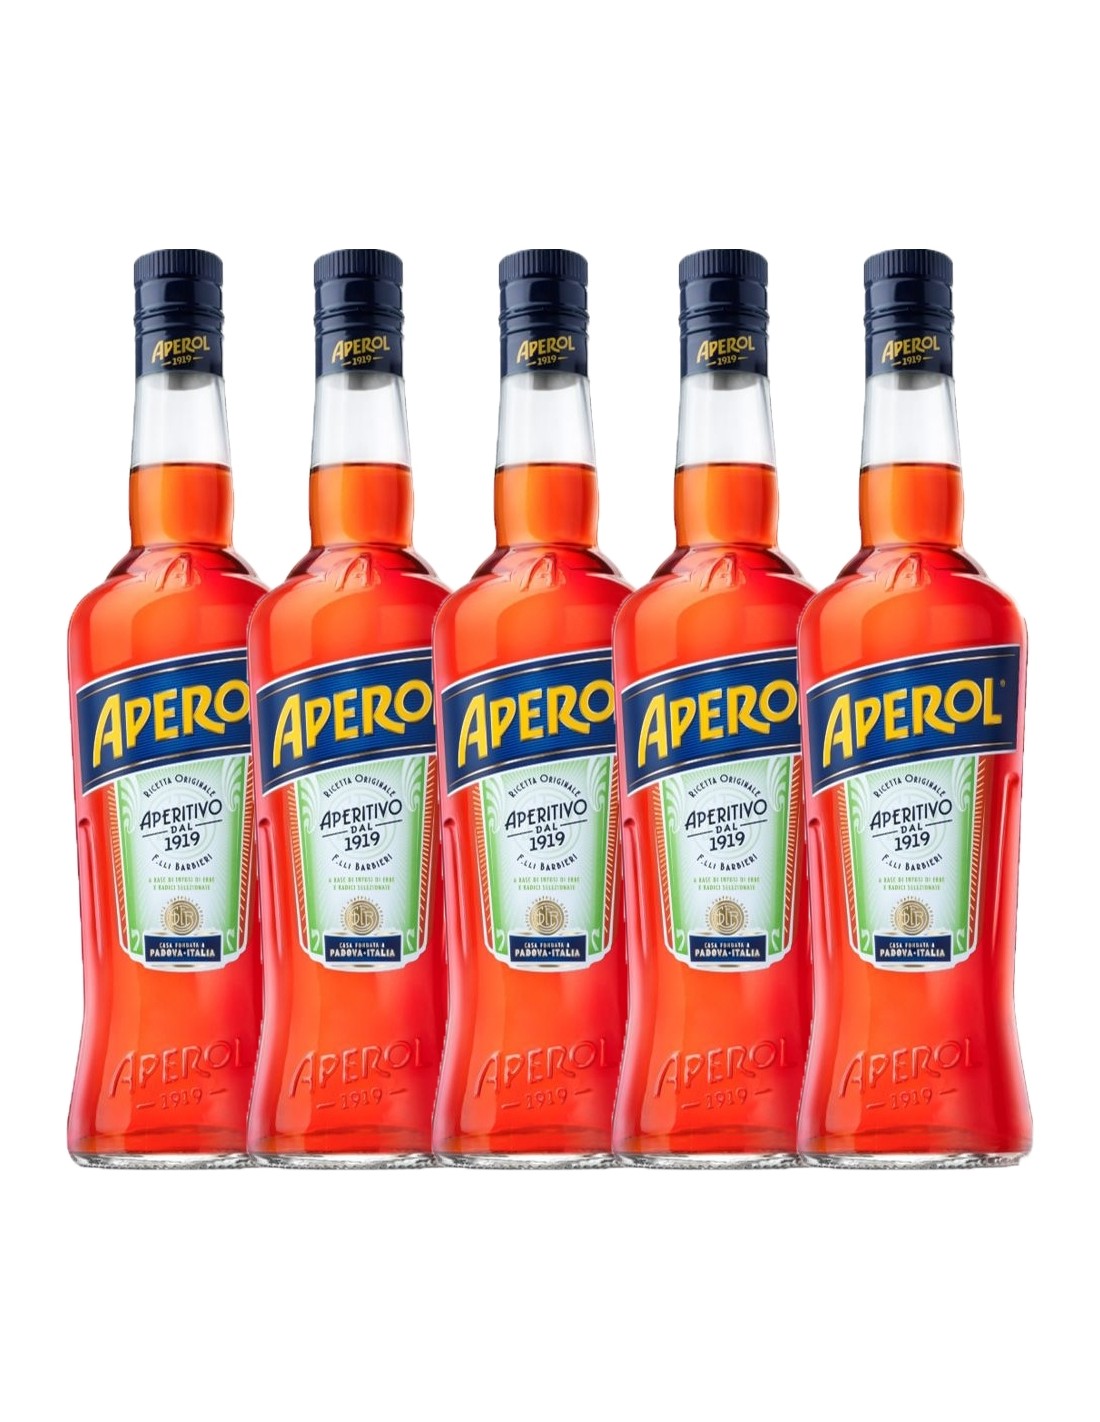 Pachet 5 sticle Aperitiv Aperol, 11% alc., 1L, Italia